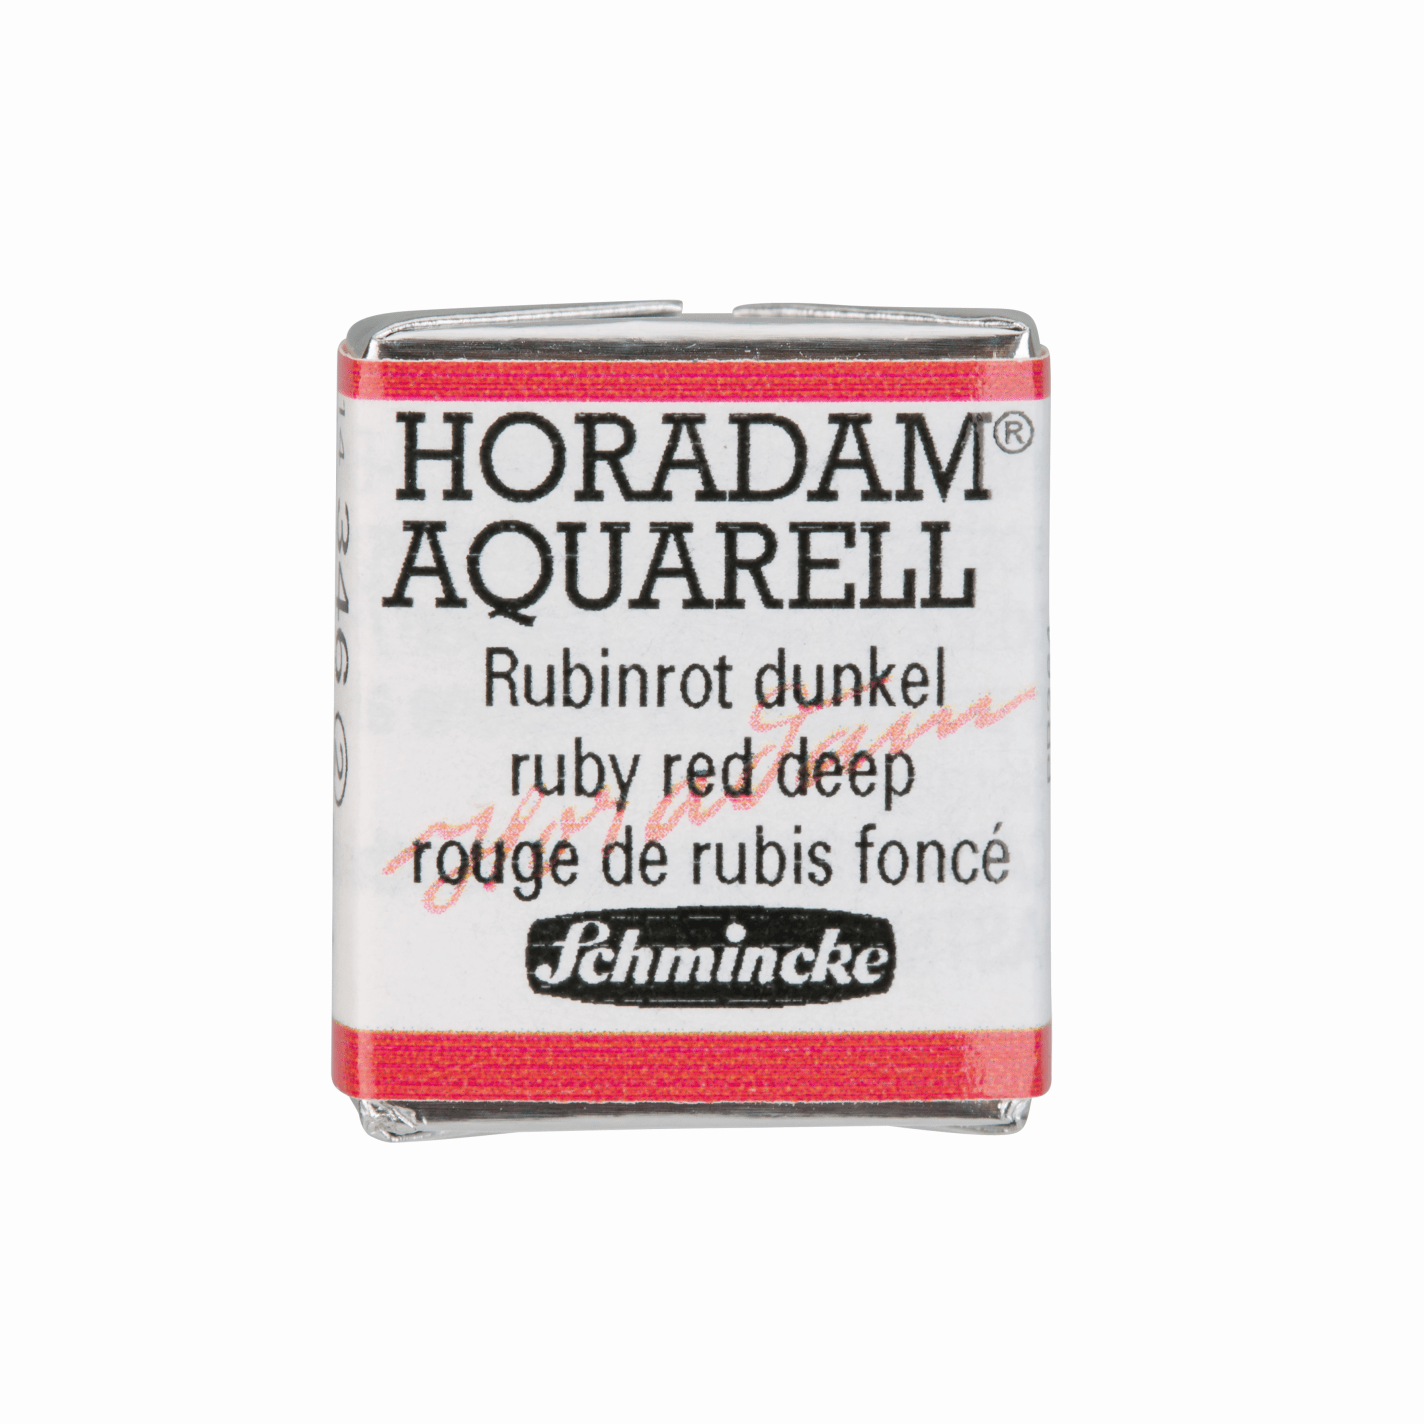 Schmincke Horadam Aquarell pans 1/2 pan Ruby Red Deep